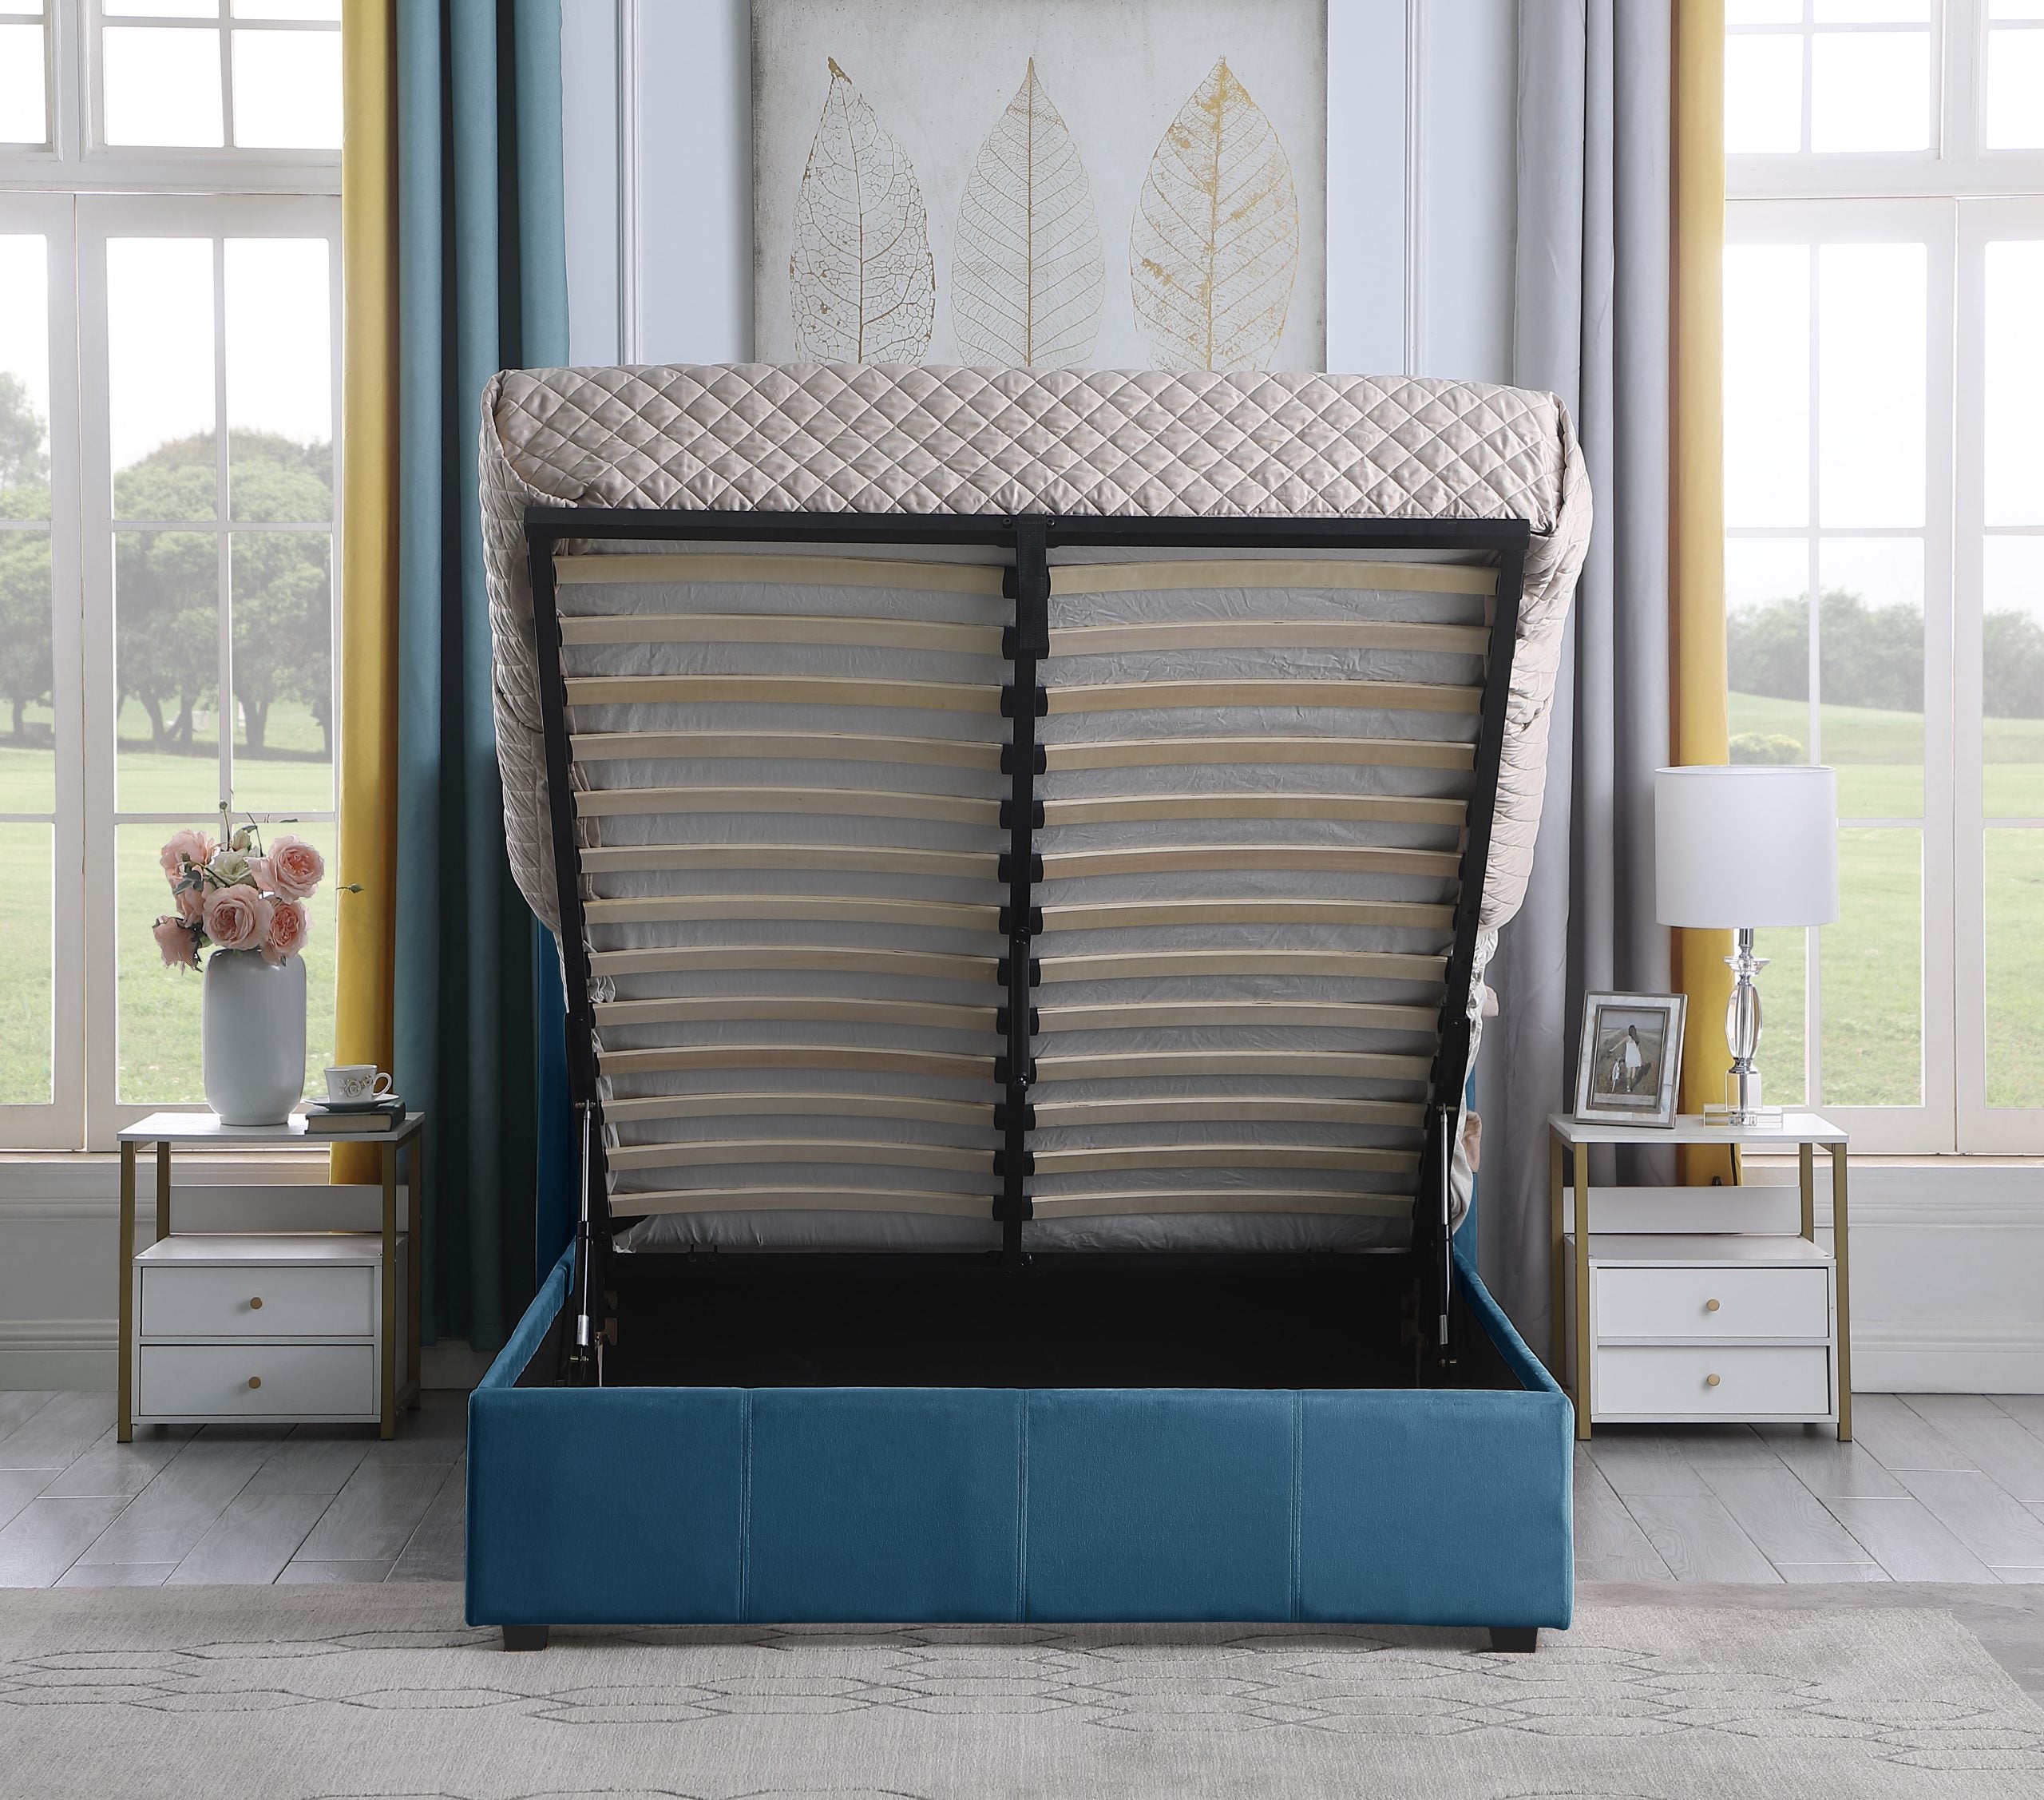 Amelia Plus 4'6" Storage Bed Blue Velvet Fabric